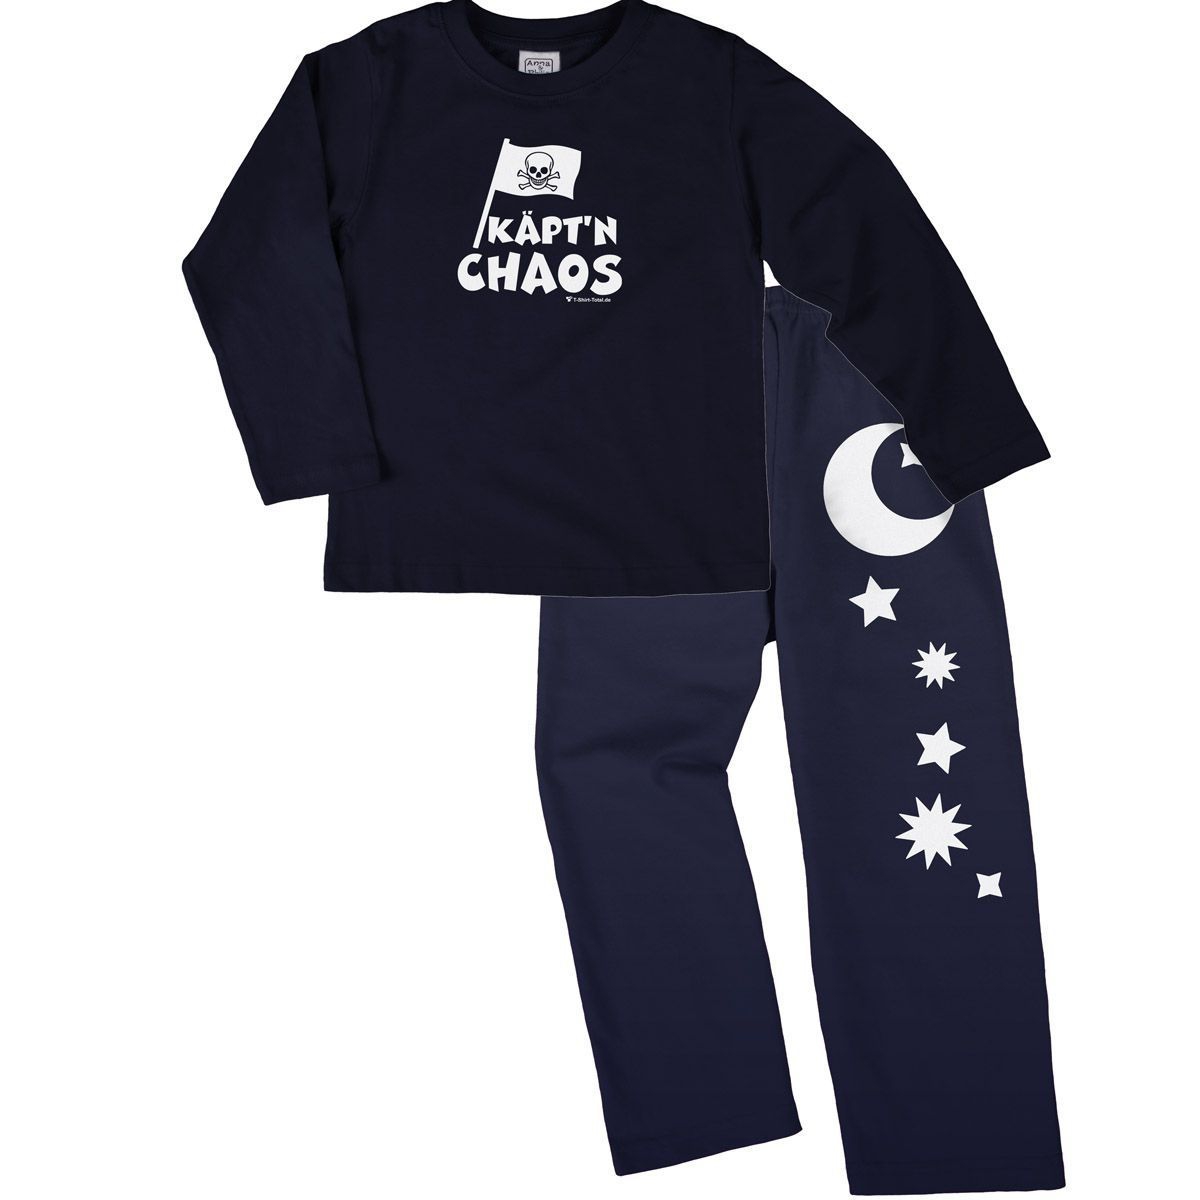 Käptn Chaos Pyjama Set navy / navy 80 / 86